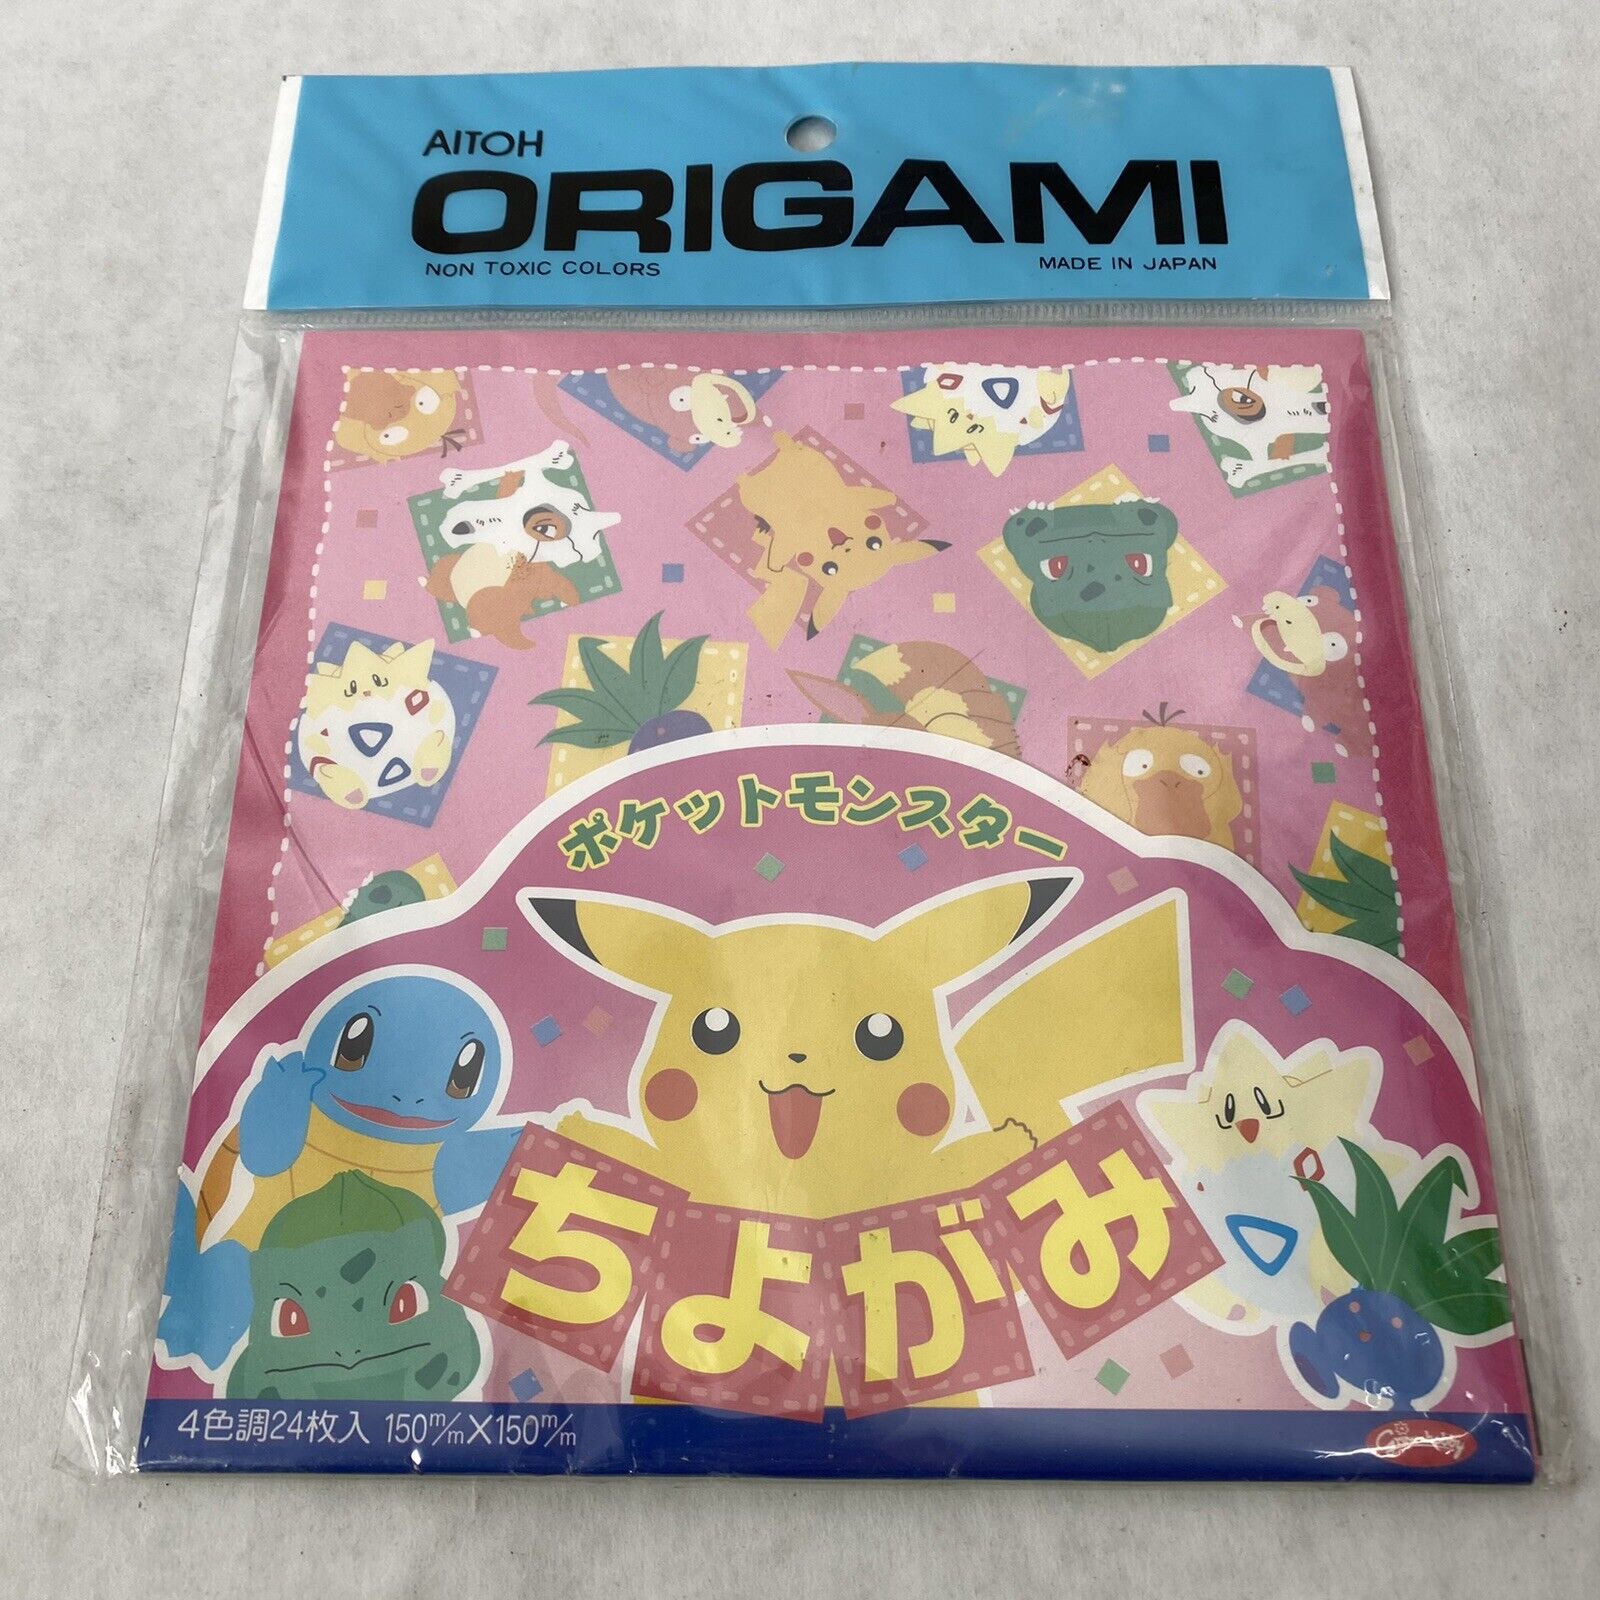 Vintage Pokemon Origami Grimm Hobby Made in Japan 1990s pocket monsters Nintendo